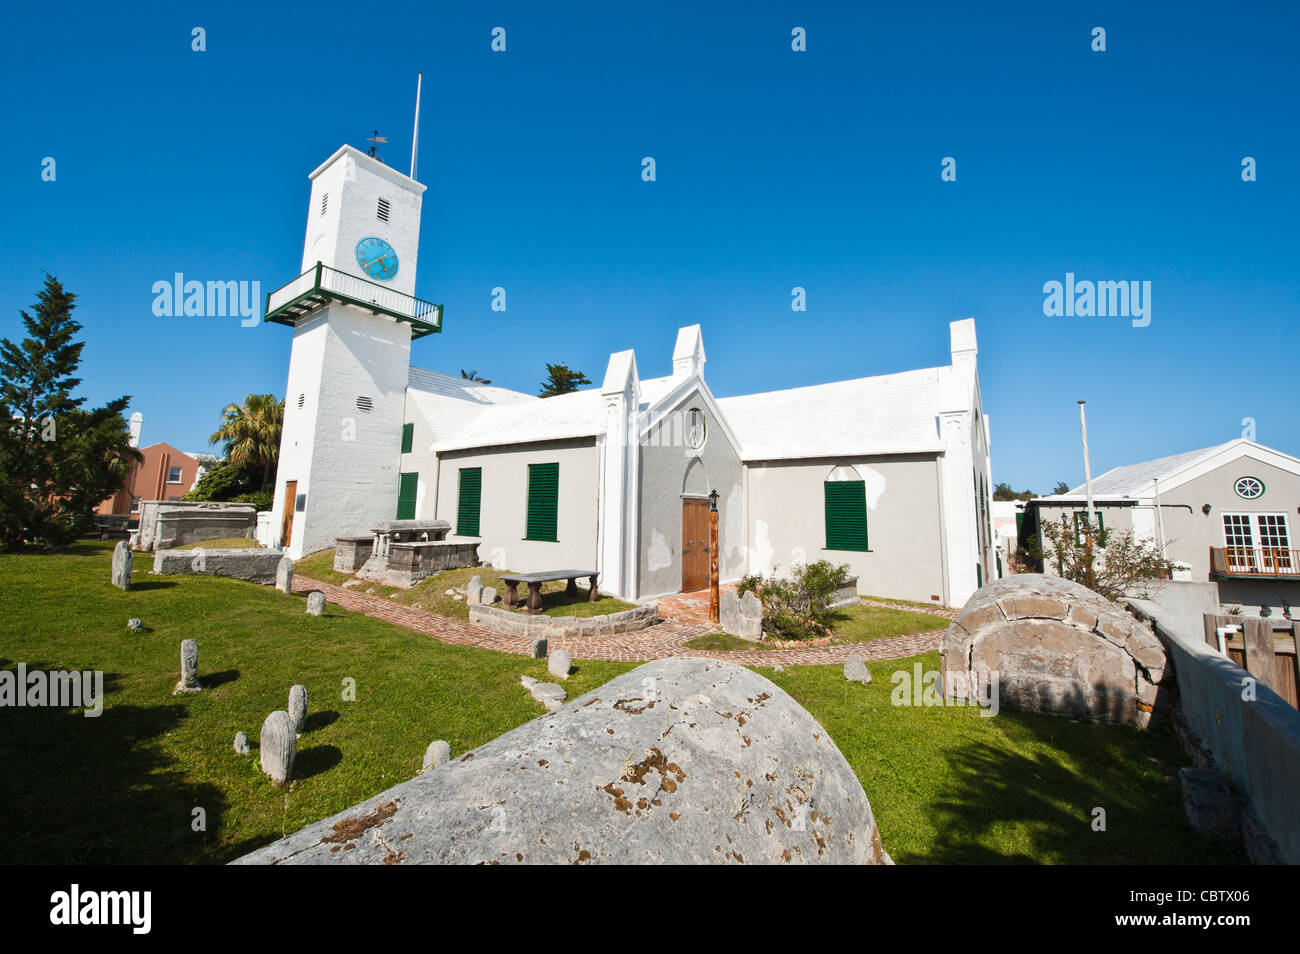 St. George, Bermuda. St. Peter's Church in St. George, Bermuda. Stock Photo